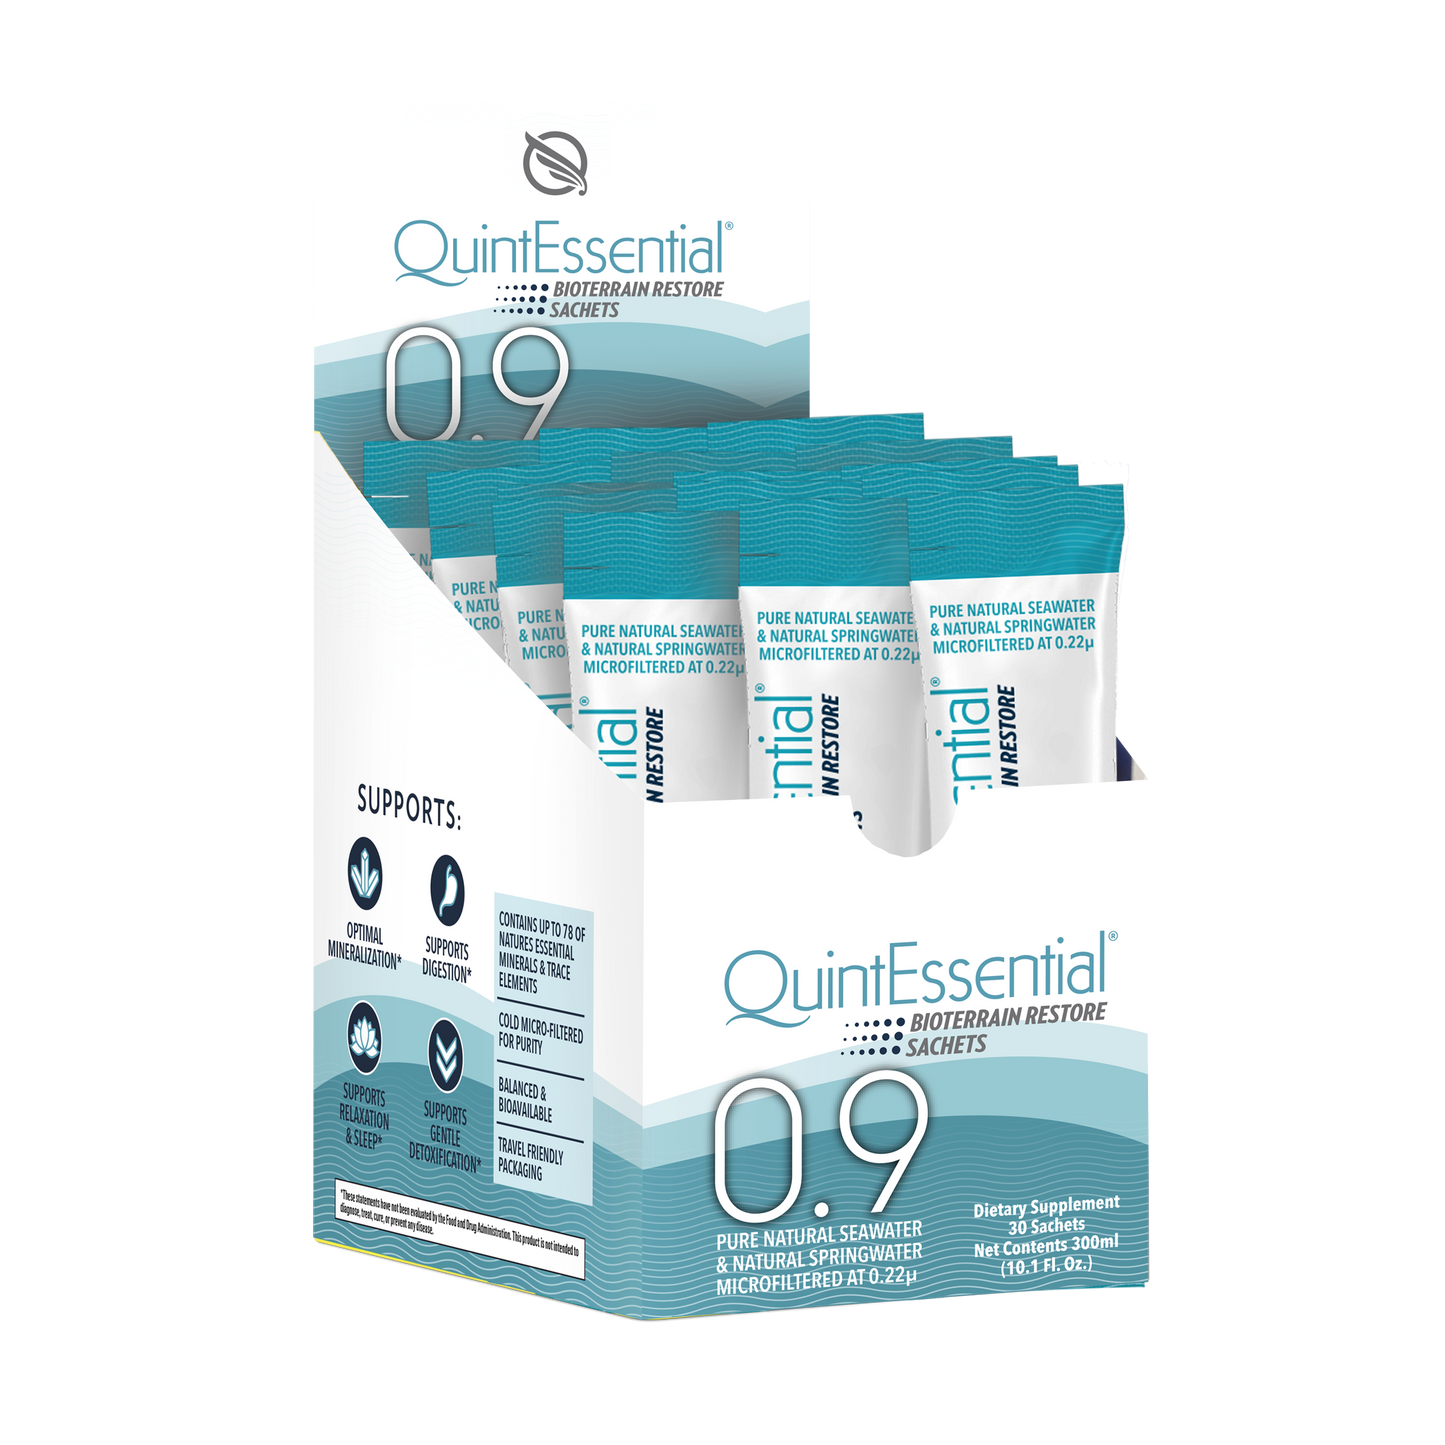 QuintEssential® 0.9 Isotonic Sachets